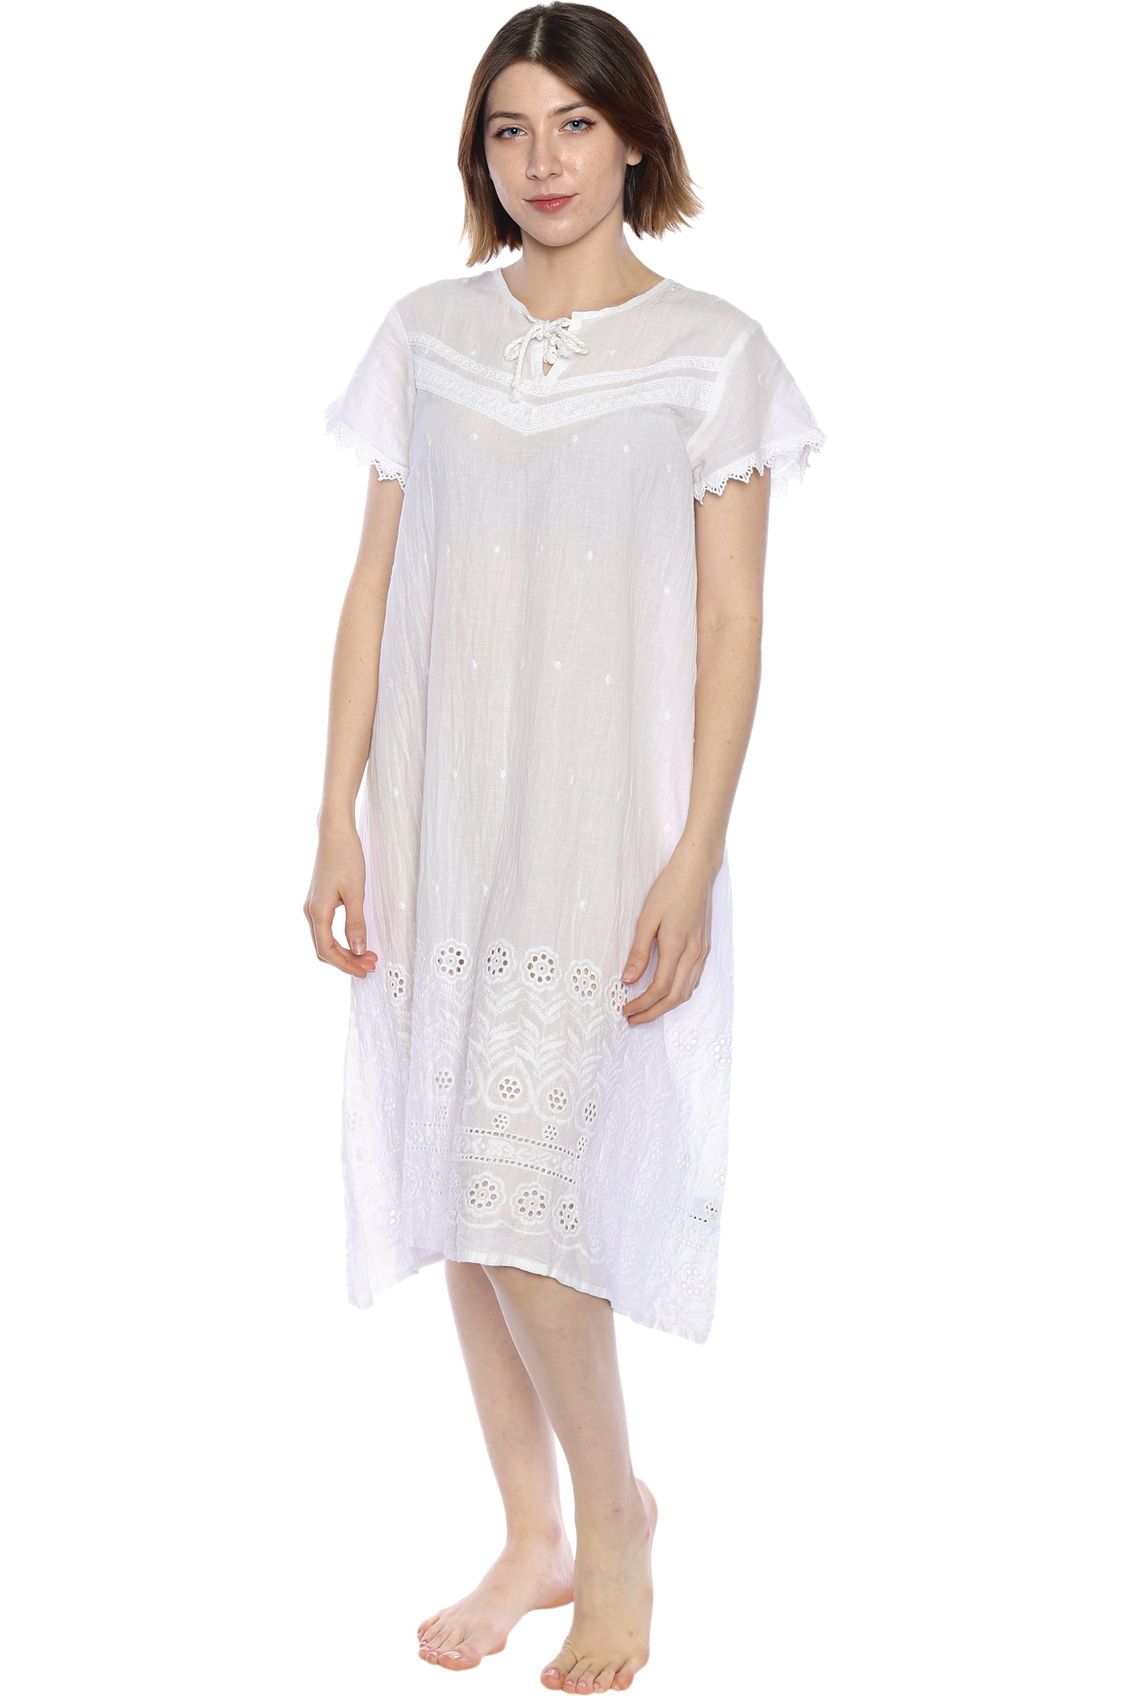 Papa 100% Cotton Nightgown - Style 4254